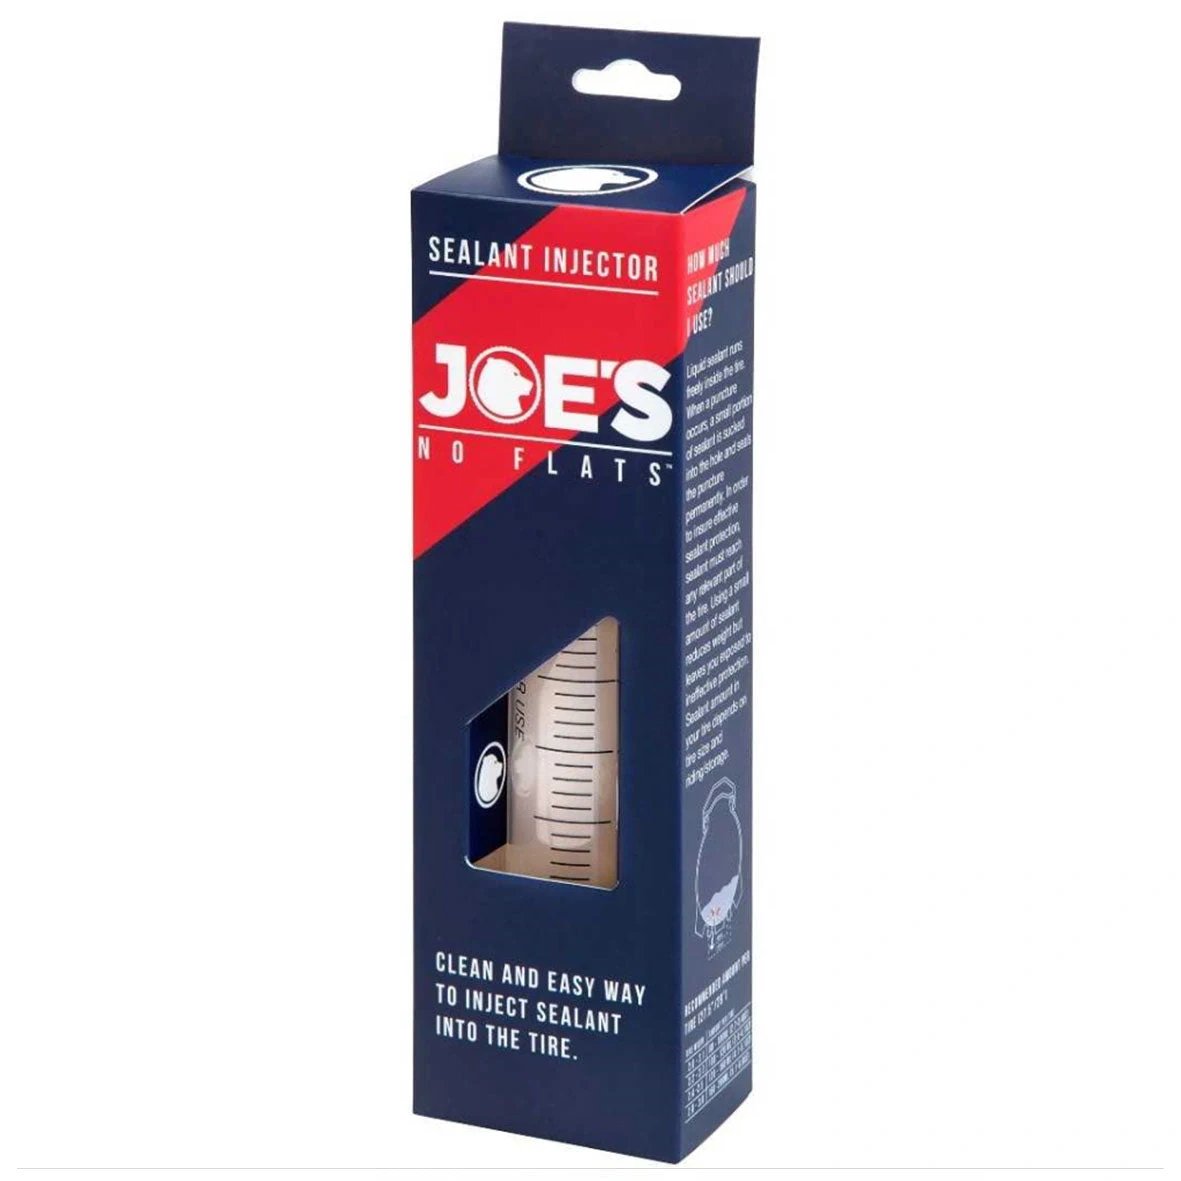 Joes-No-Flats Sealant Injector For Tire Repair